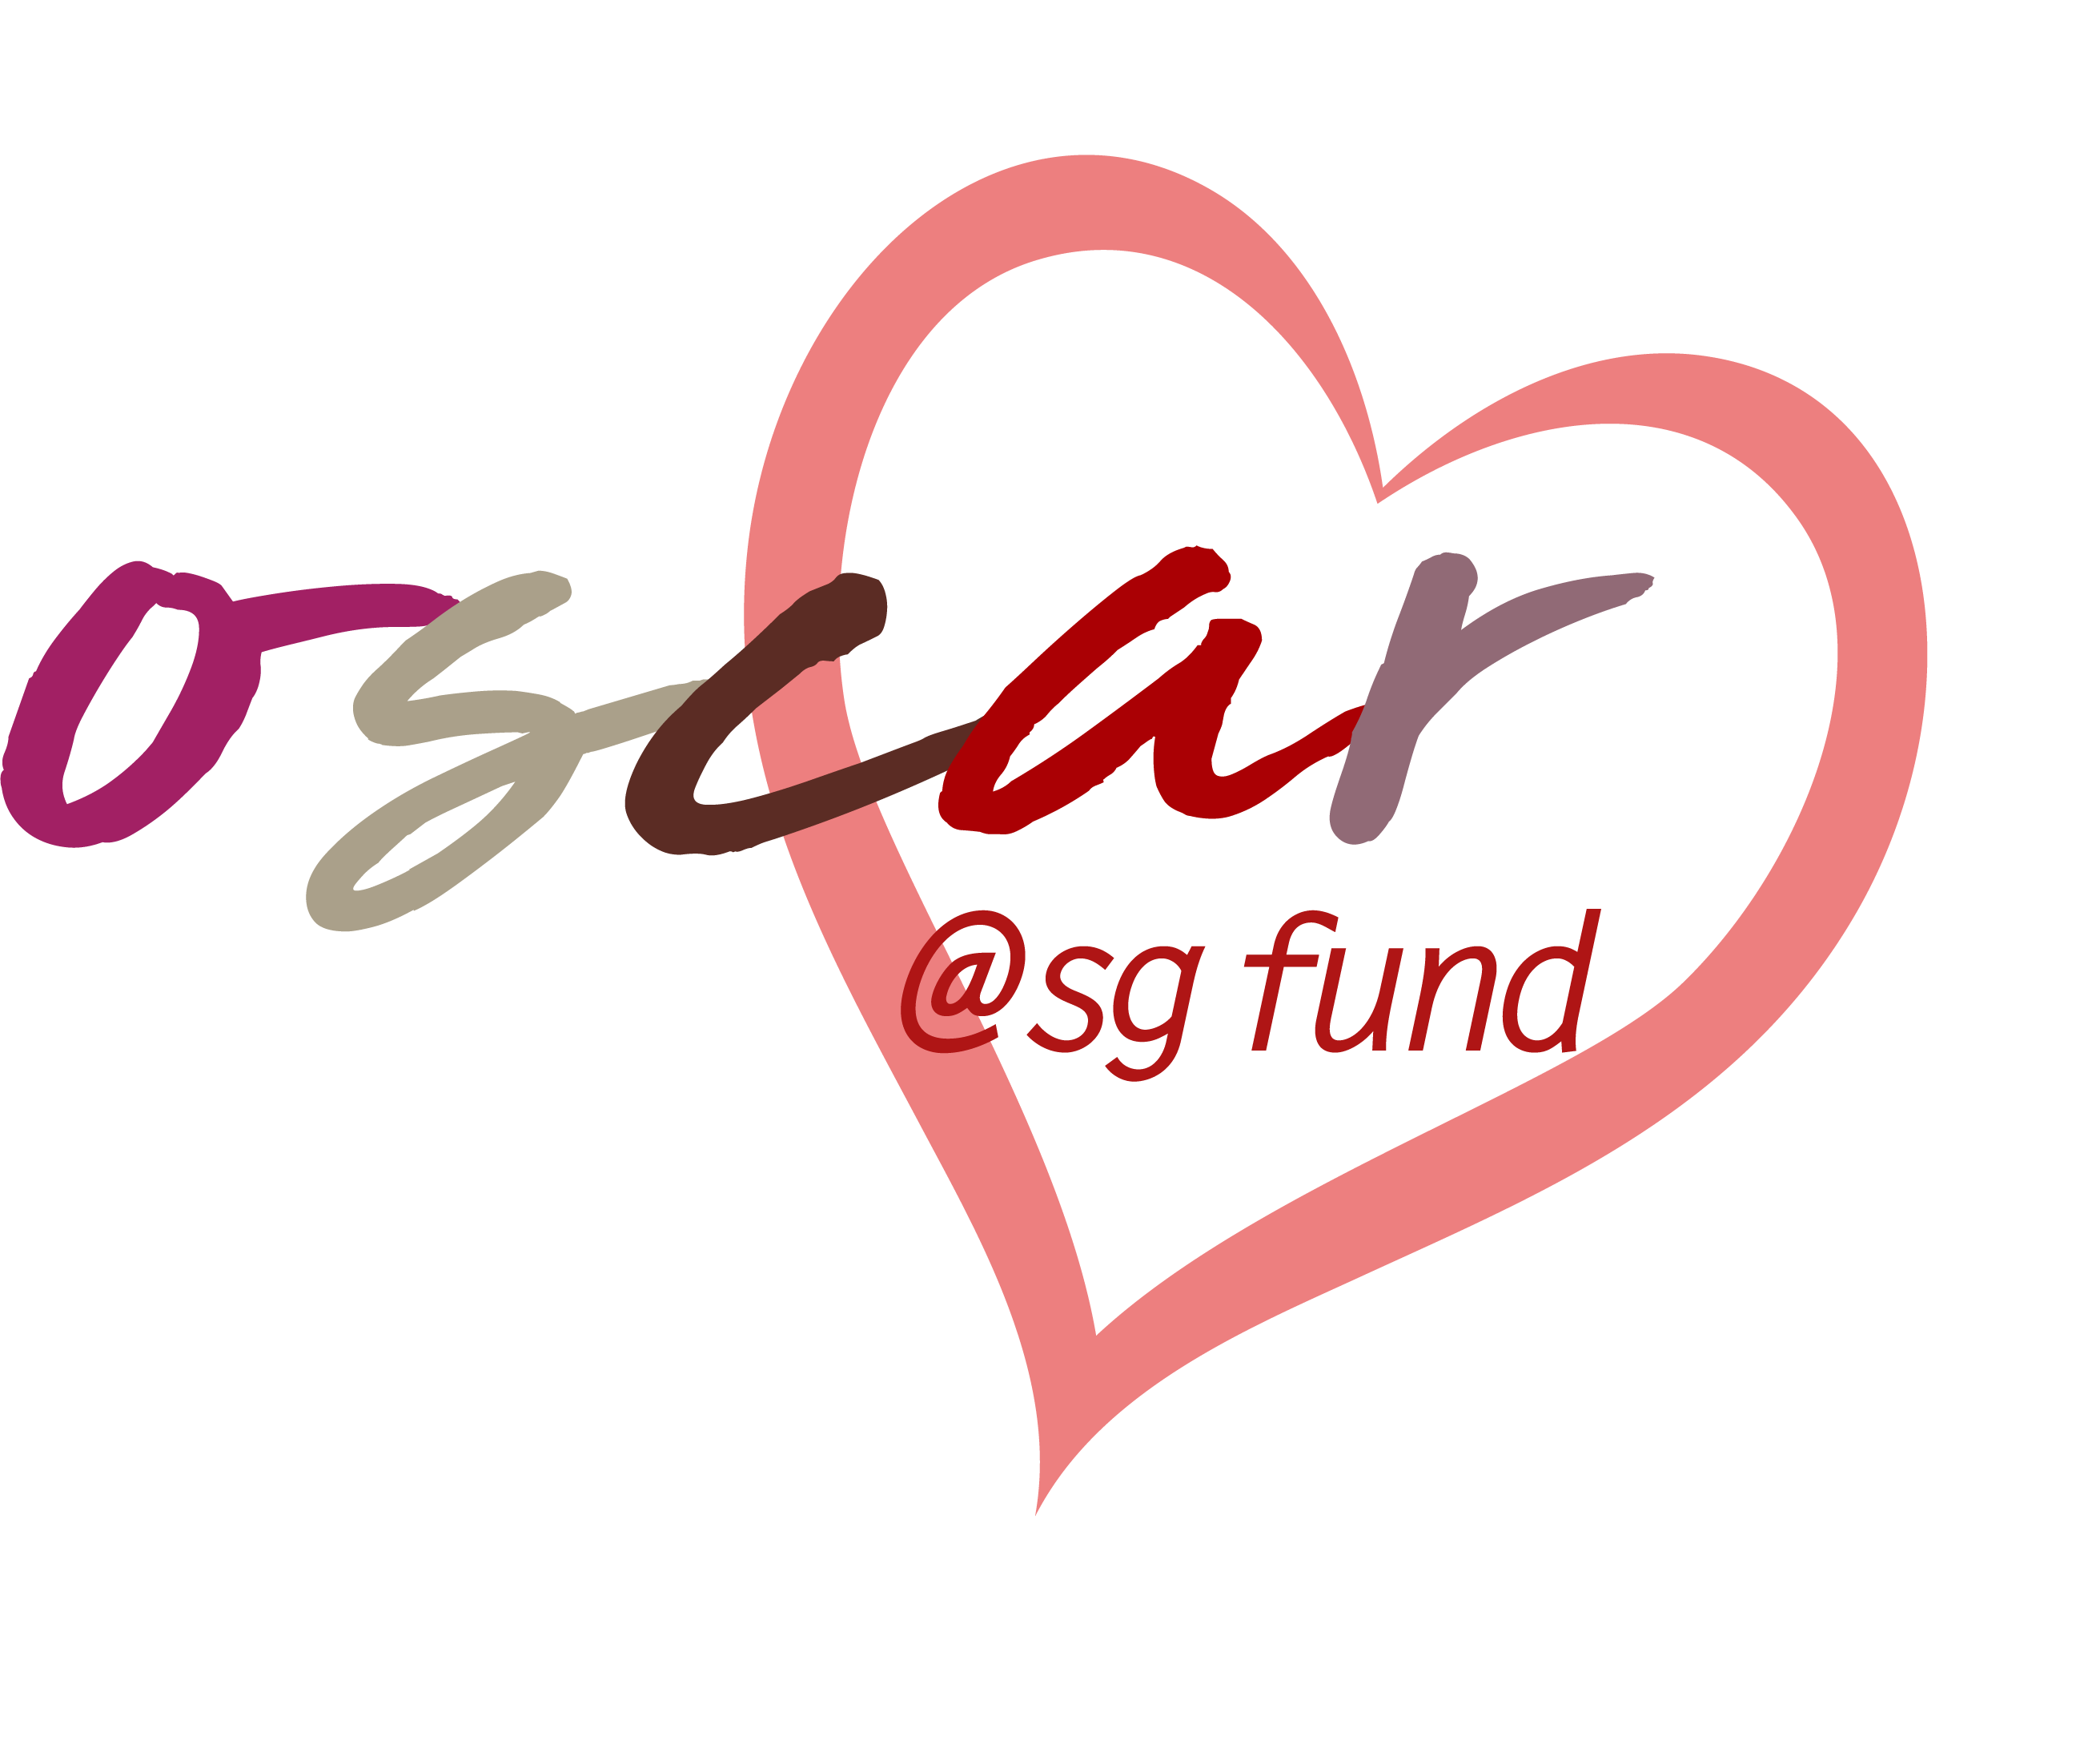 Temasek Trust’s oscar@sg fund launch video